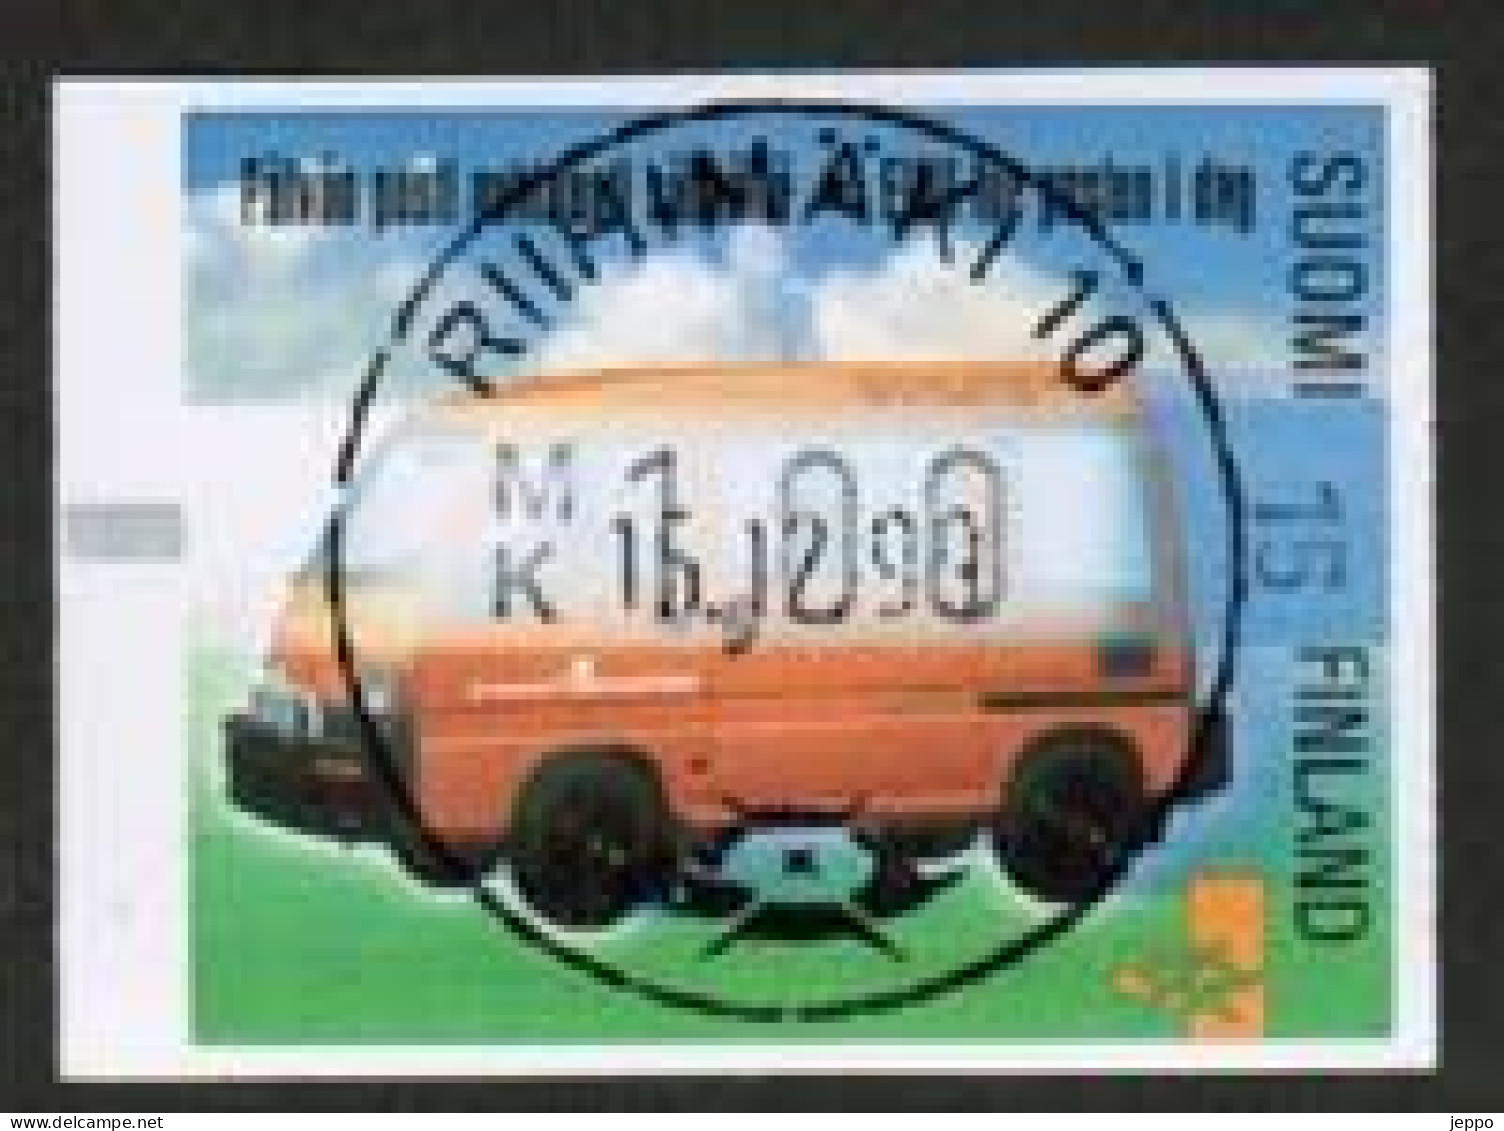 1999 Finland ATM Michel 33, Electric Post Car Fine Used Label. - Vignette [ATM]